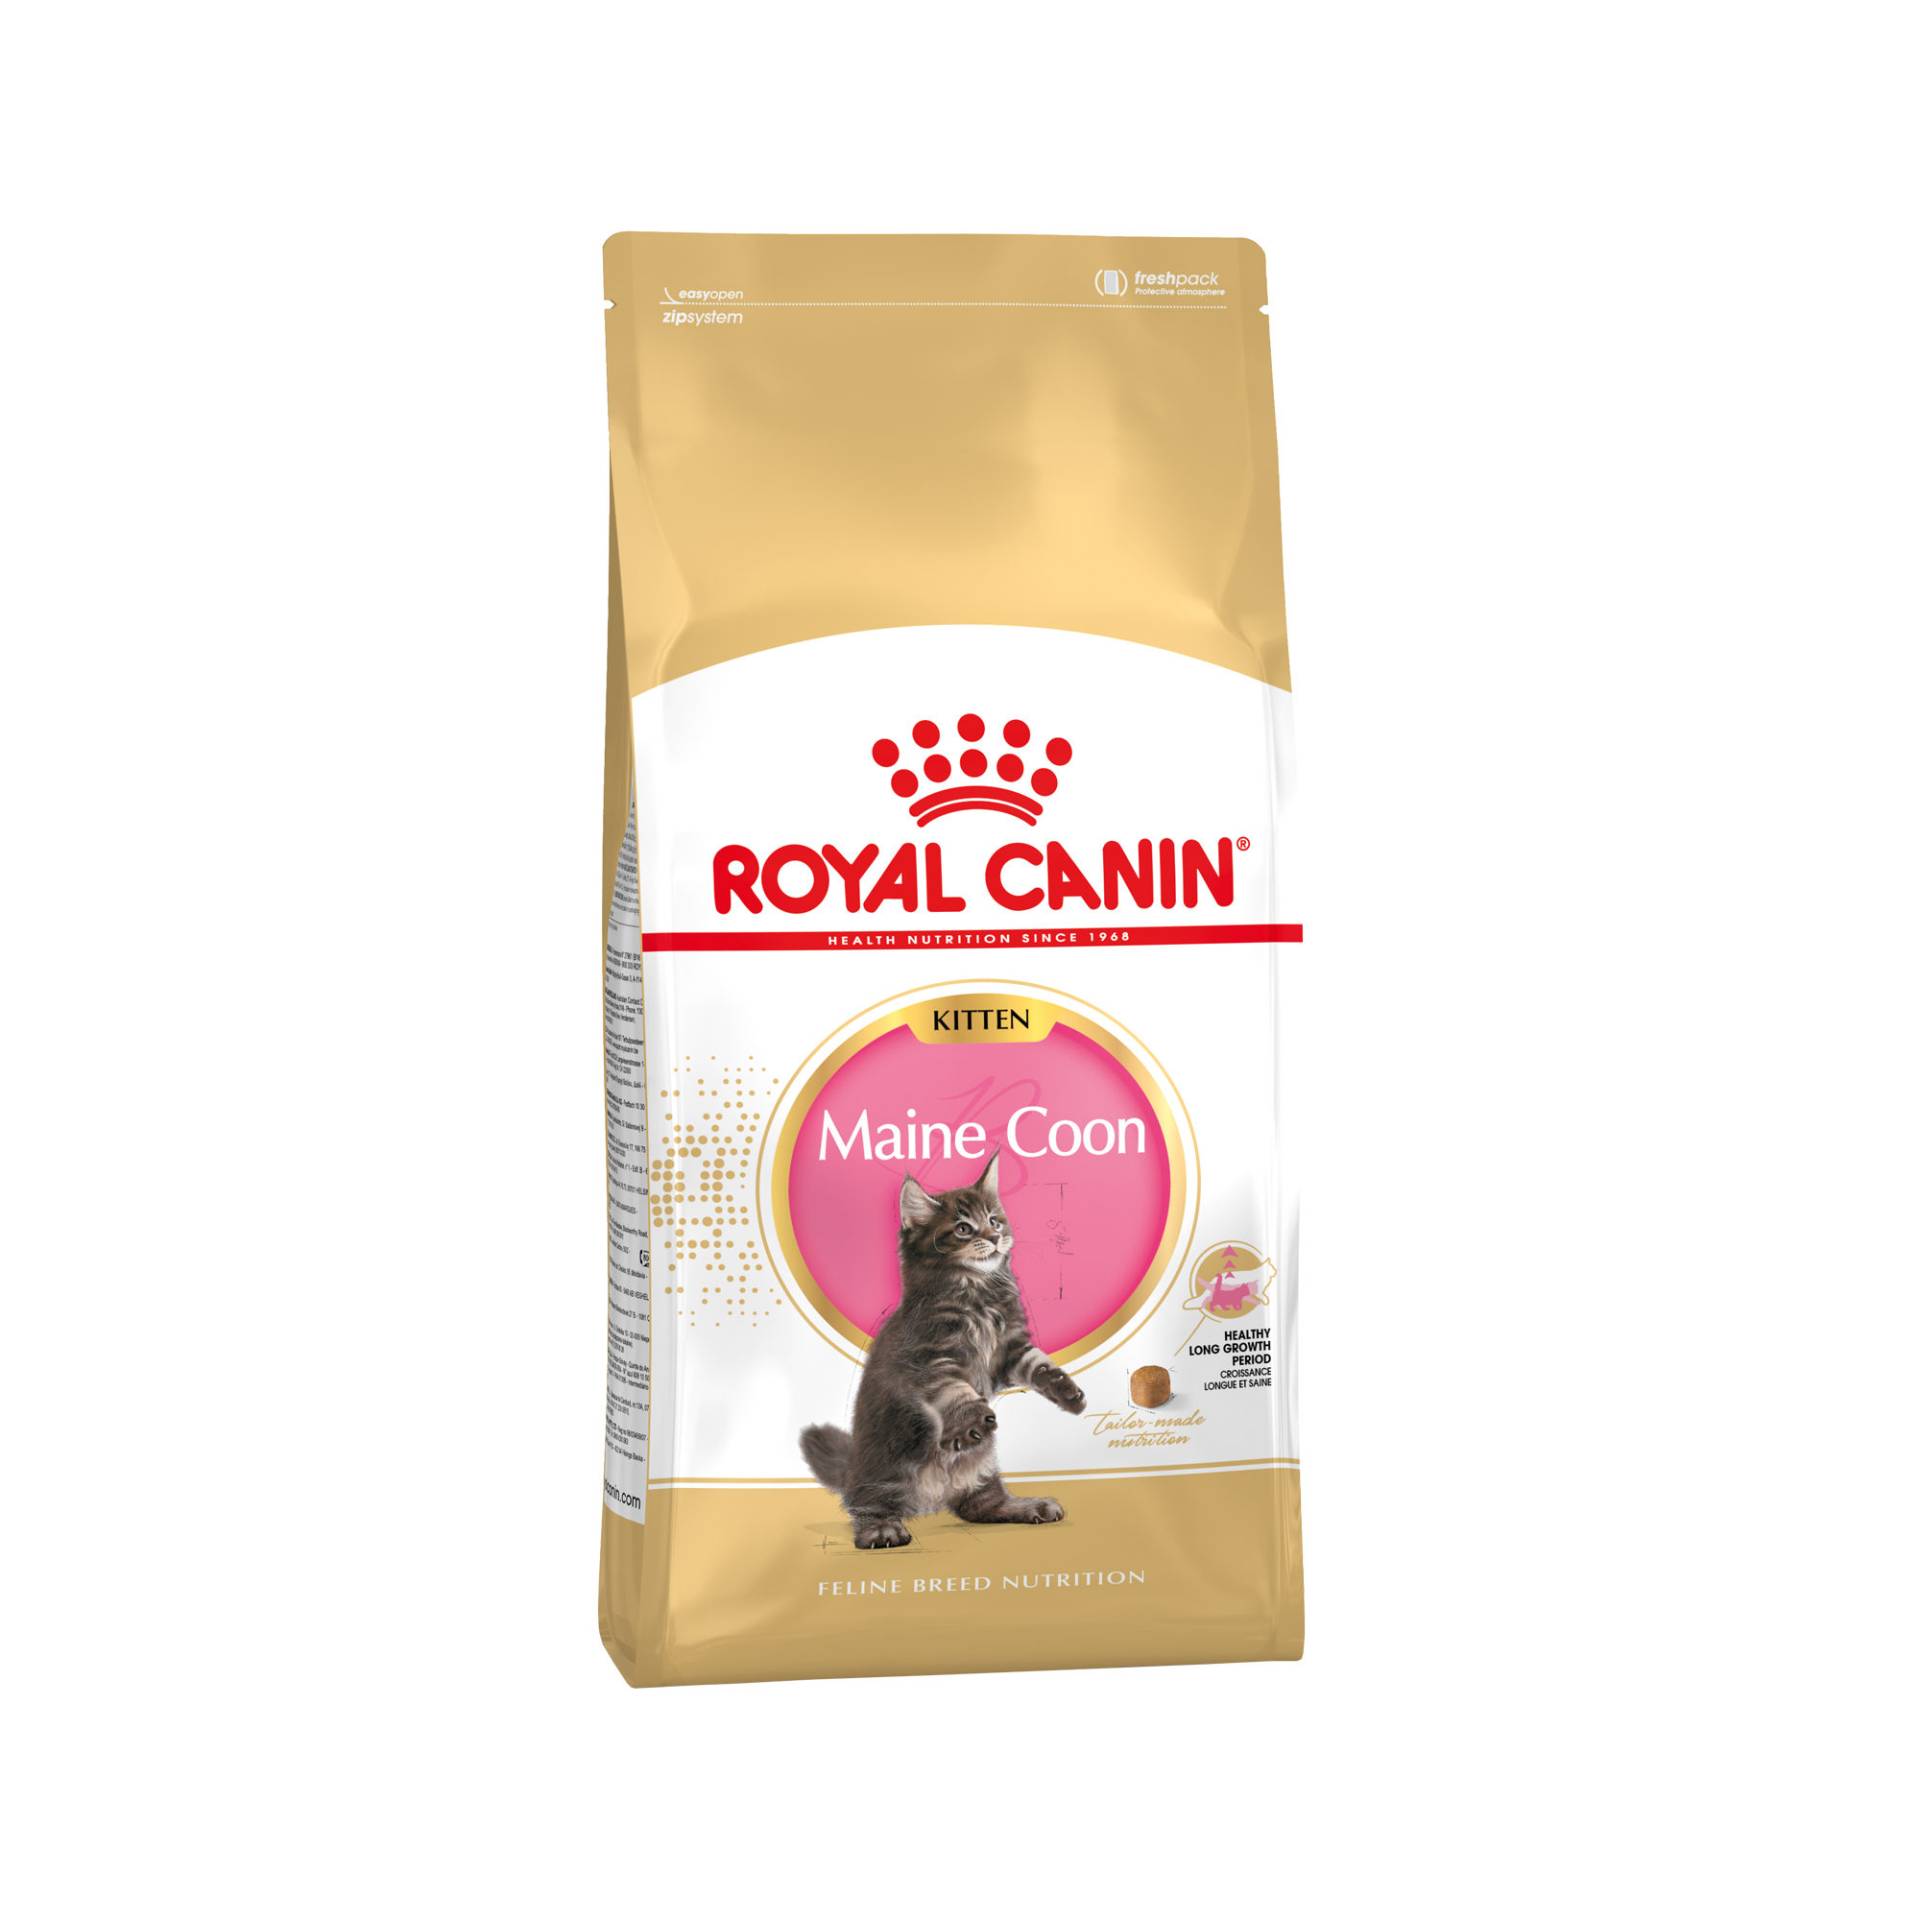 Royal Canin Maine Coon Kitten Katzenfutter - 4 kg von Royal Canin